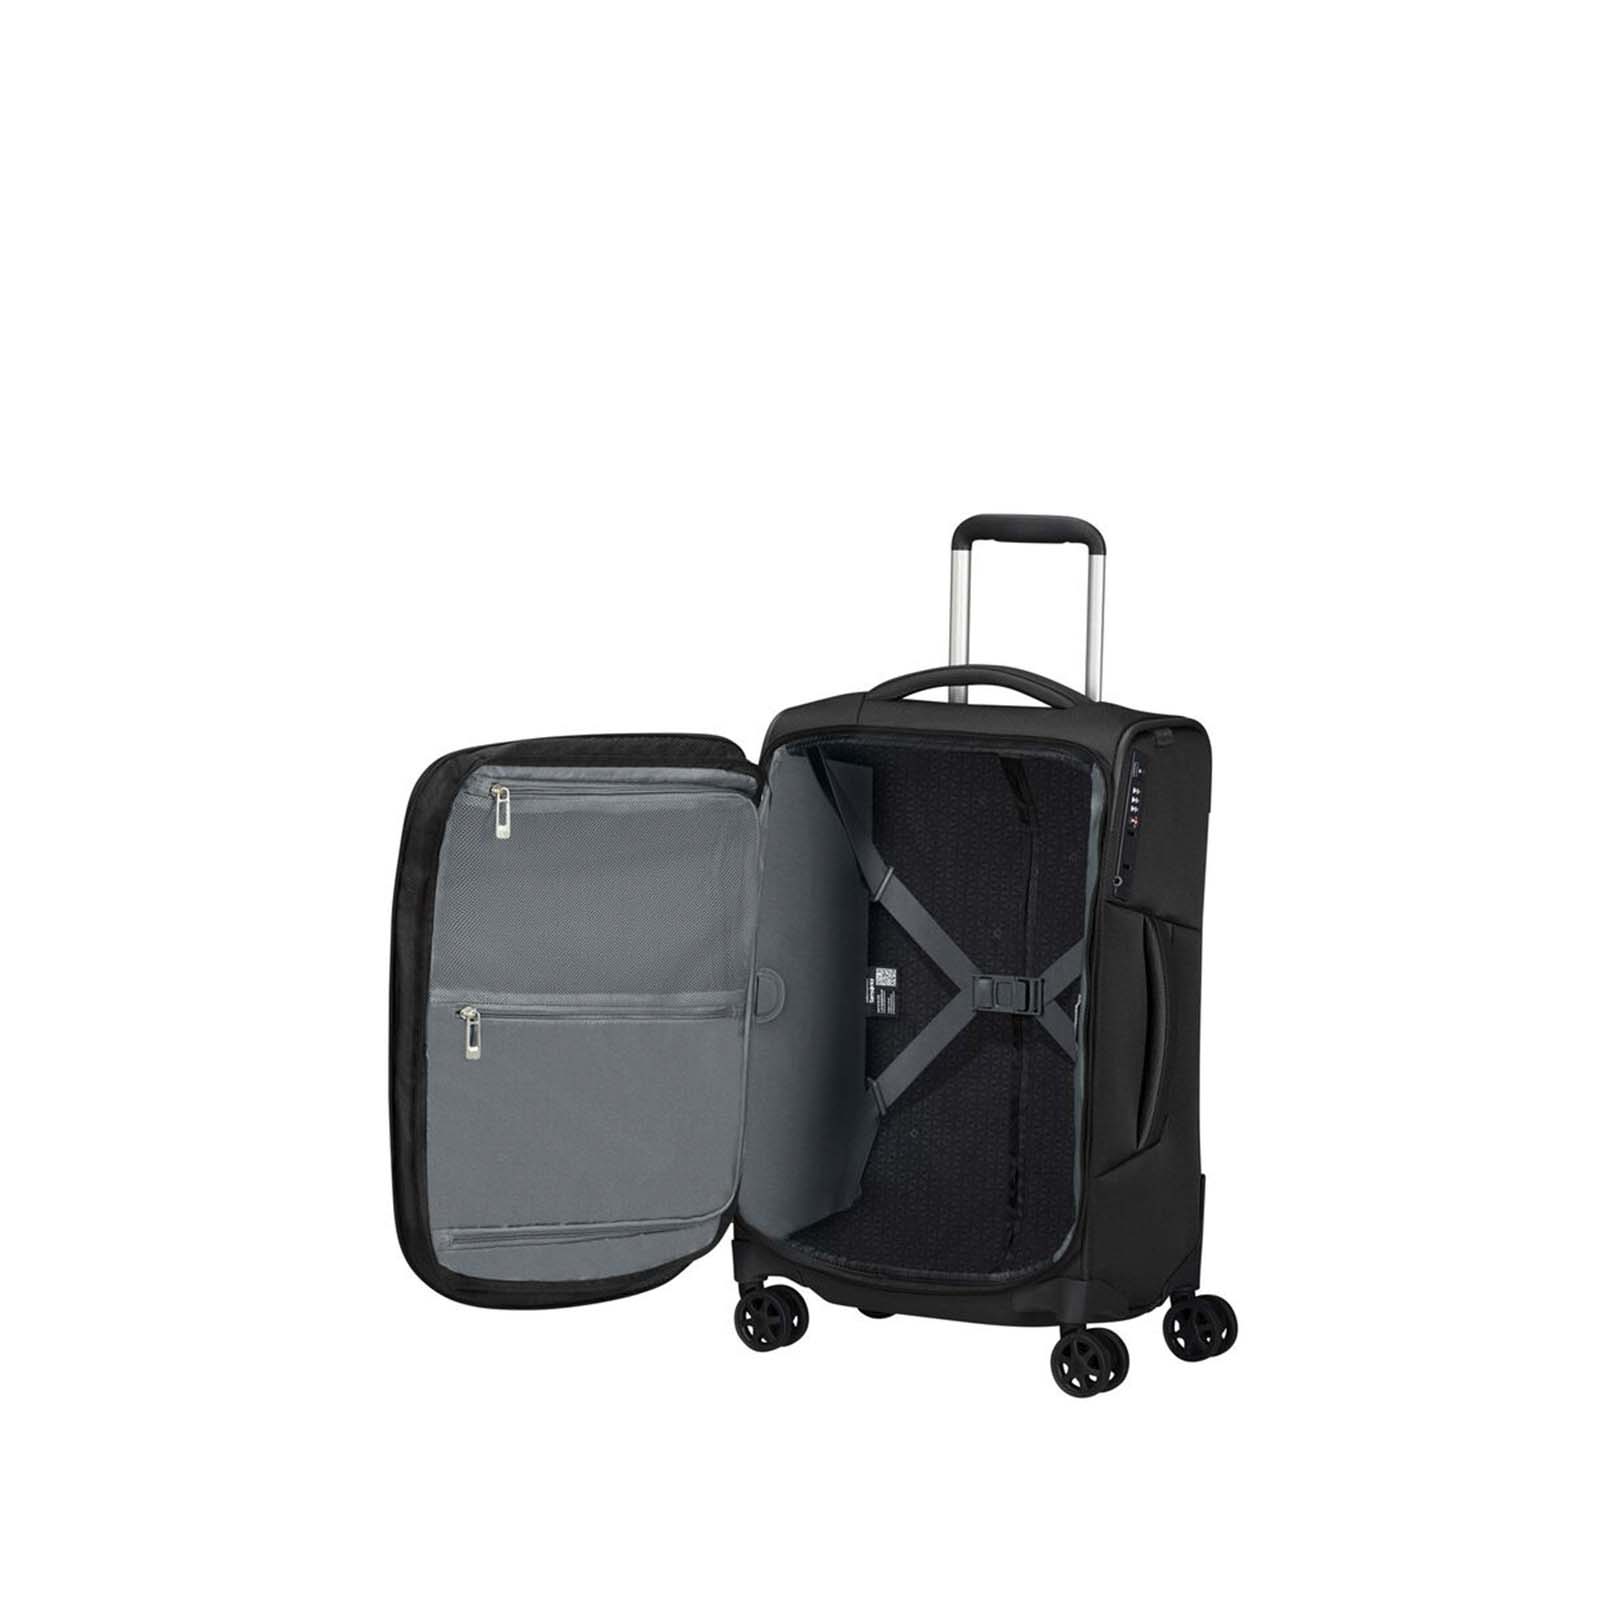 Samsonite-Respark-55cm-Carry-On-Suitcase-Ozone-Black-Open